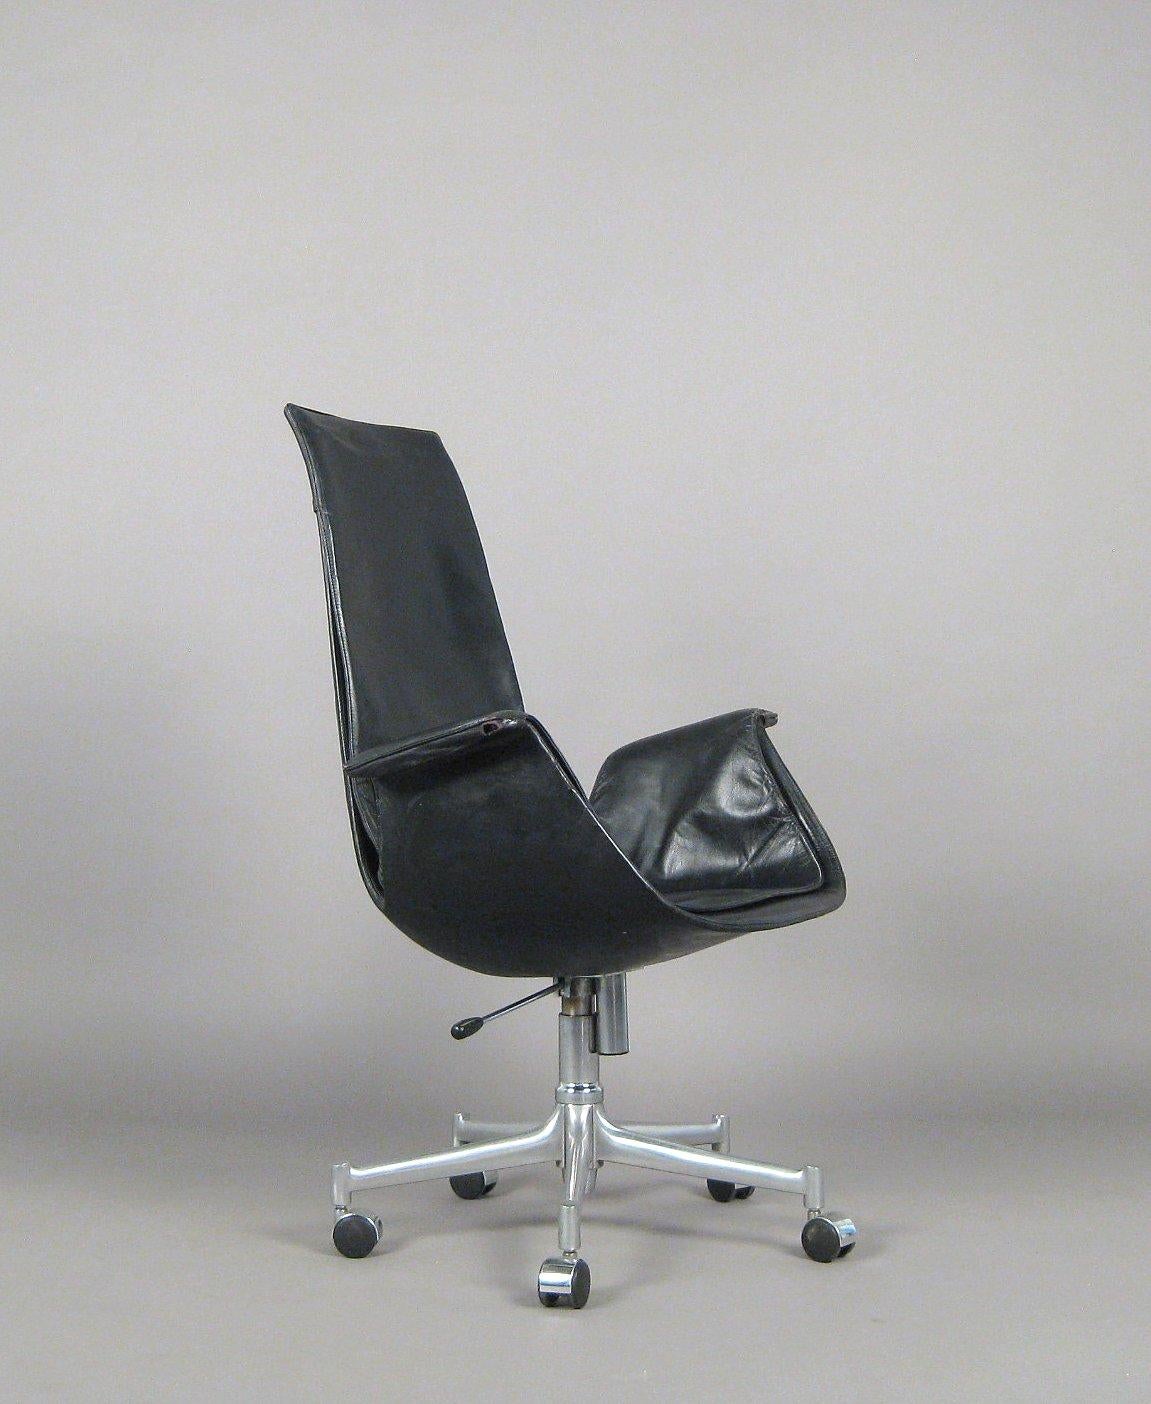 Office chair model Tulip FK 6725, Danish design by Jørgen Kastholm & Preben Fabricius for Kill International, 1964. Black fiber-coated fiberglass shell, five-piece polished aluminum base, gas lift adjustable height, wiping function and castors,